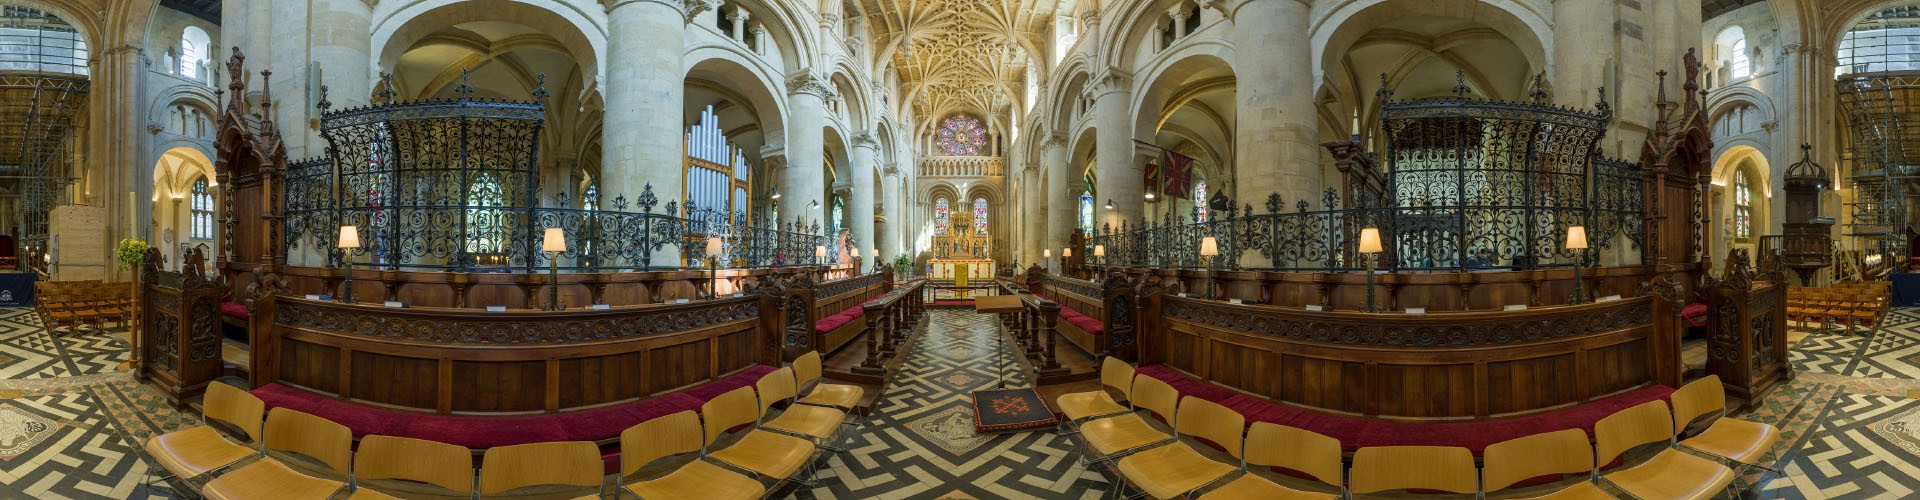 Oxford Christ Church Cathedral (30k) HDRI